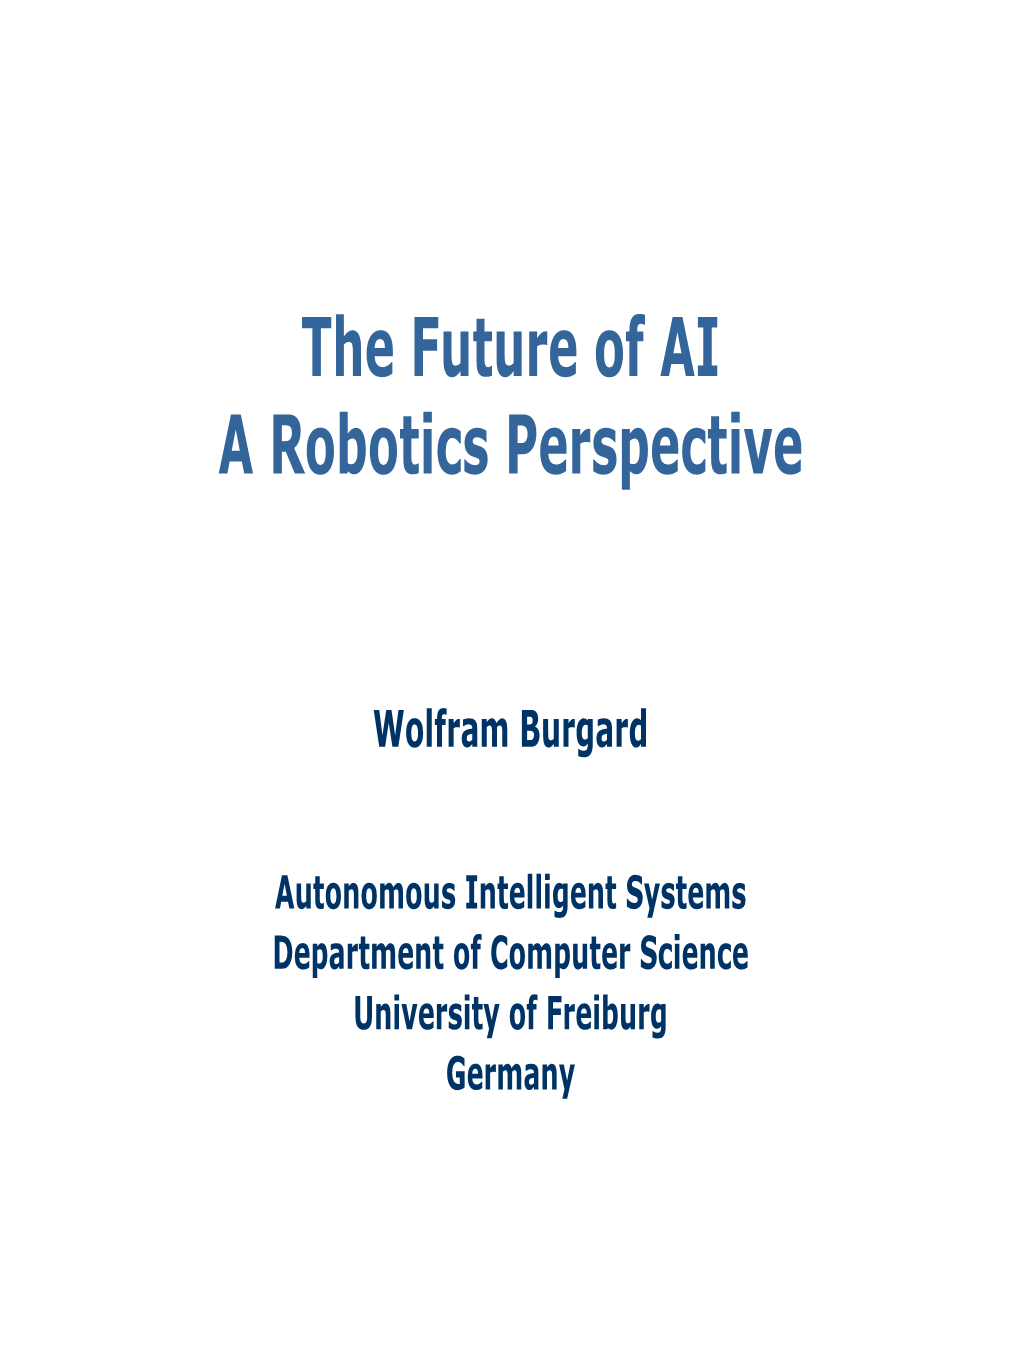 The Future of AI: a Robotics Perspective